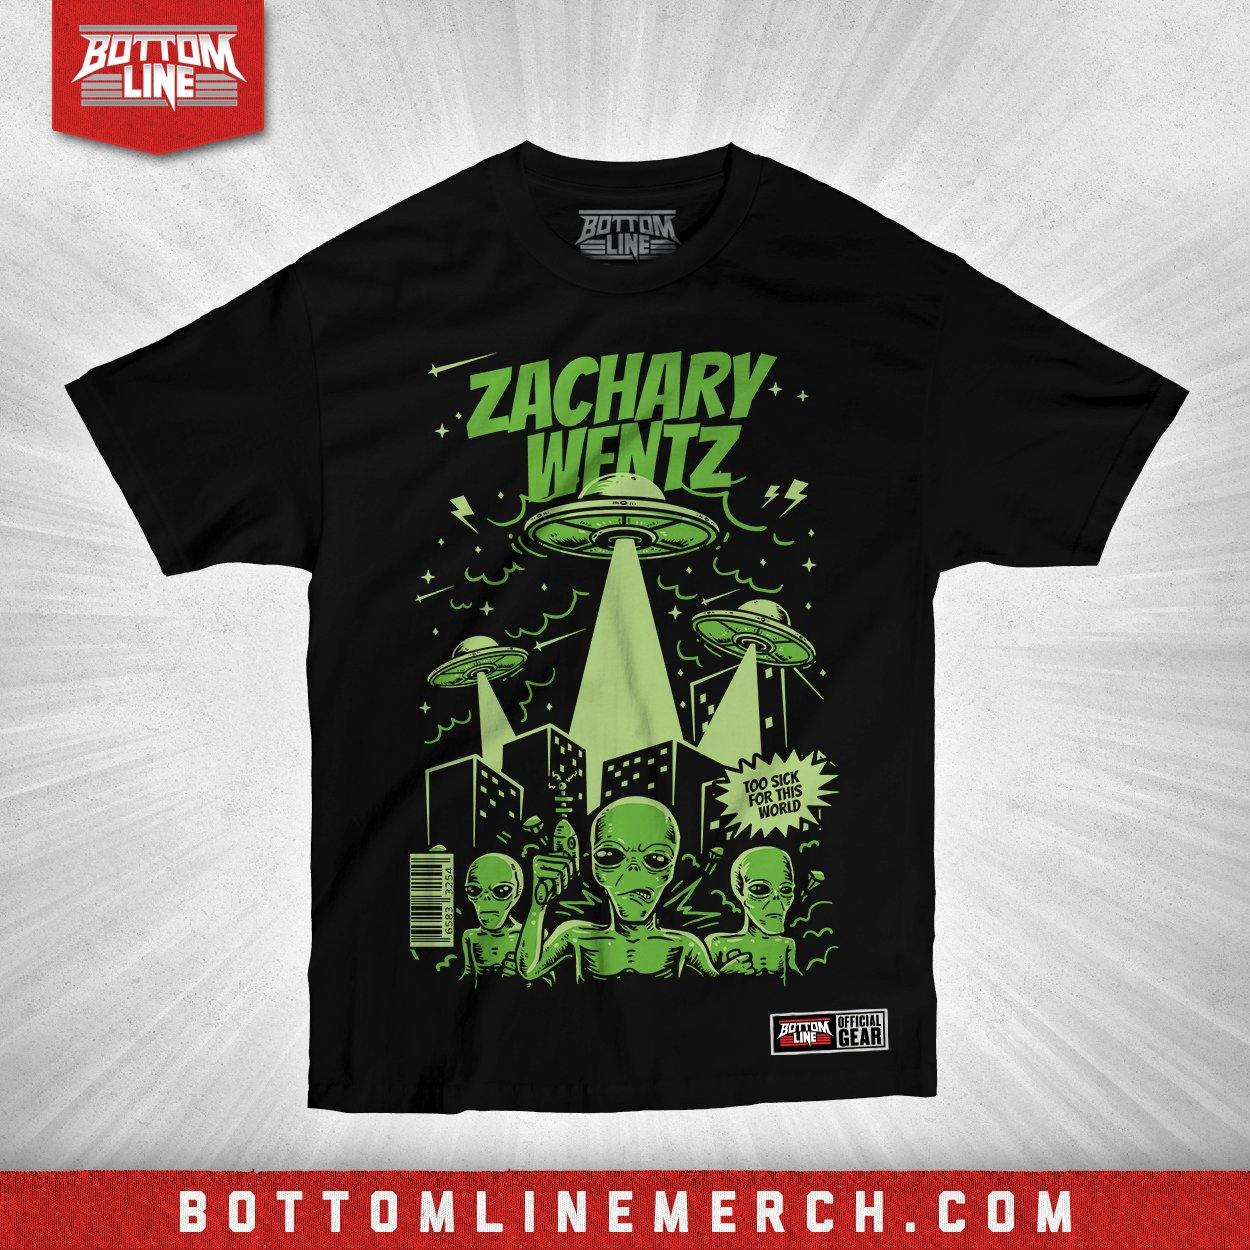 Buy Now – Zachary Wentz "Comic Book" Shirt – Wrestler & Wrestling Merch – Bottom Line